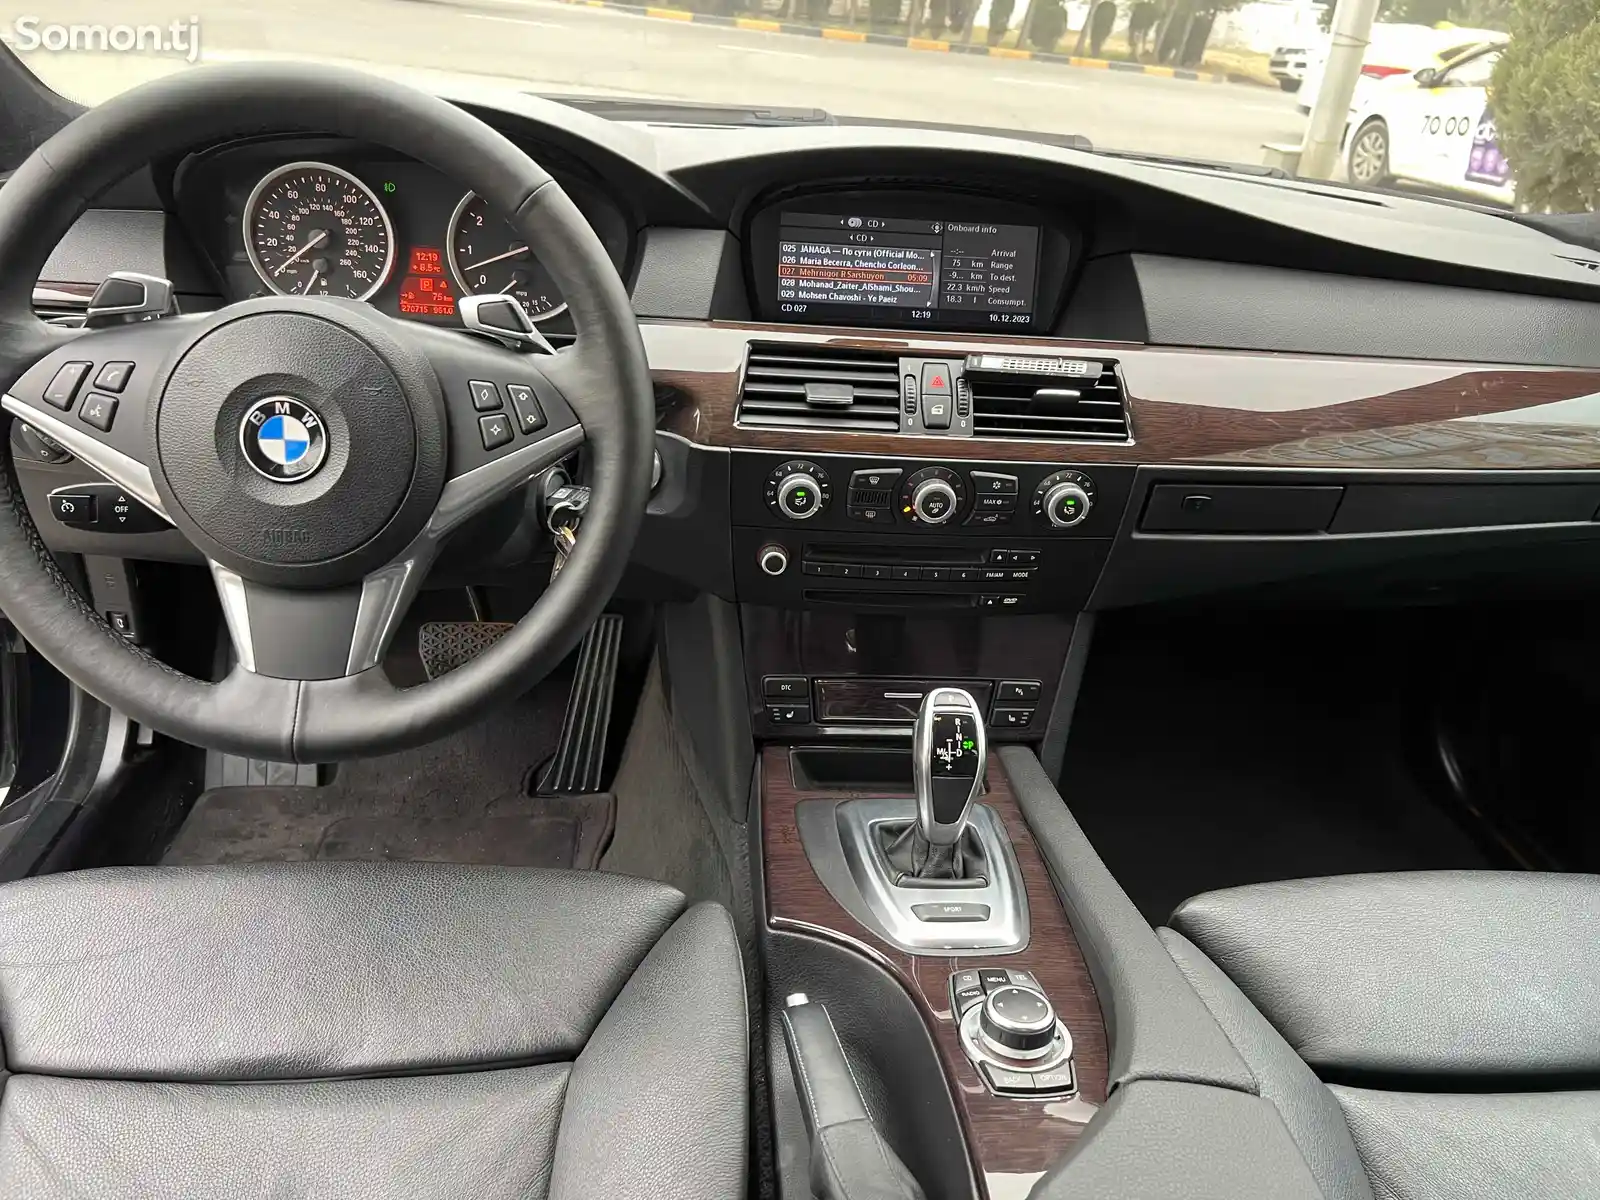 BMW 5 series, 2009-13